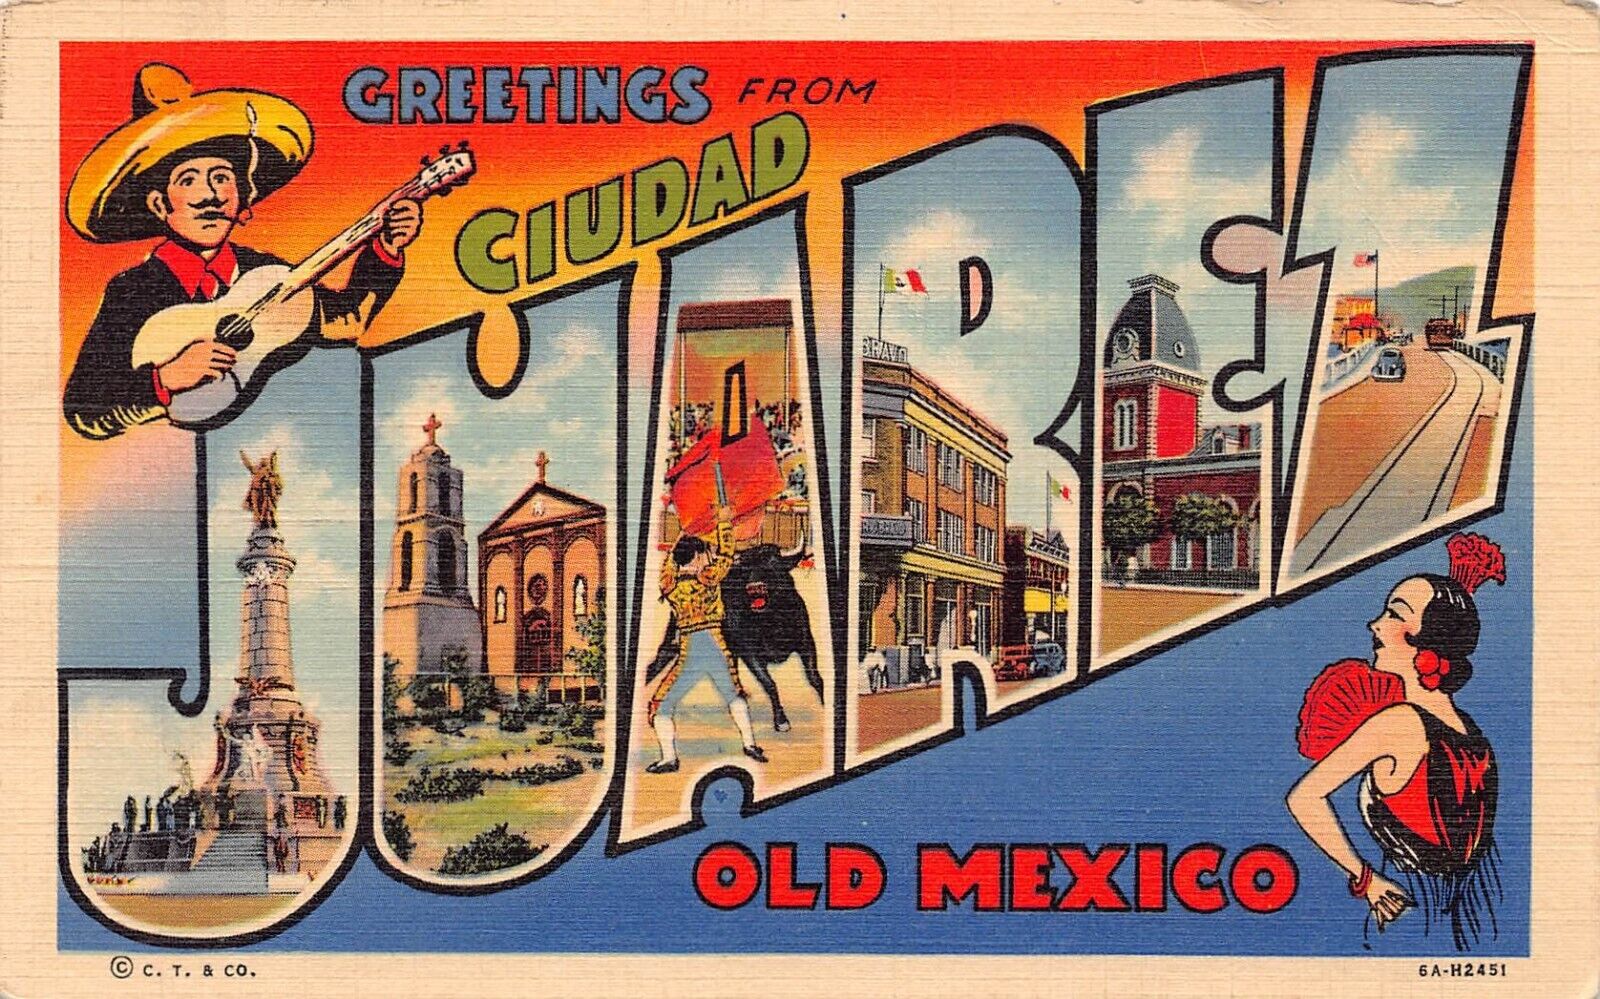 1957? Ciudad Juarez Old Mexico Greetings Large Letter Linen 6A-H2451 Postcard